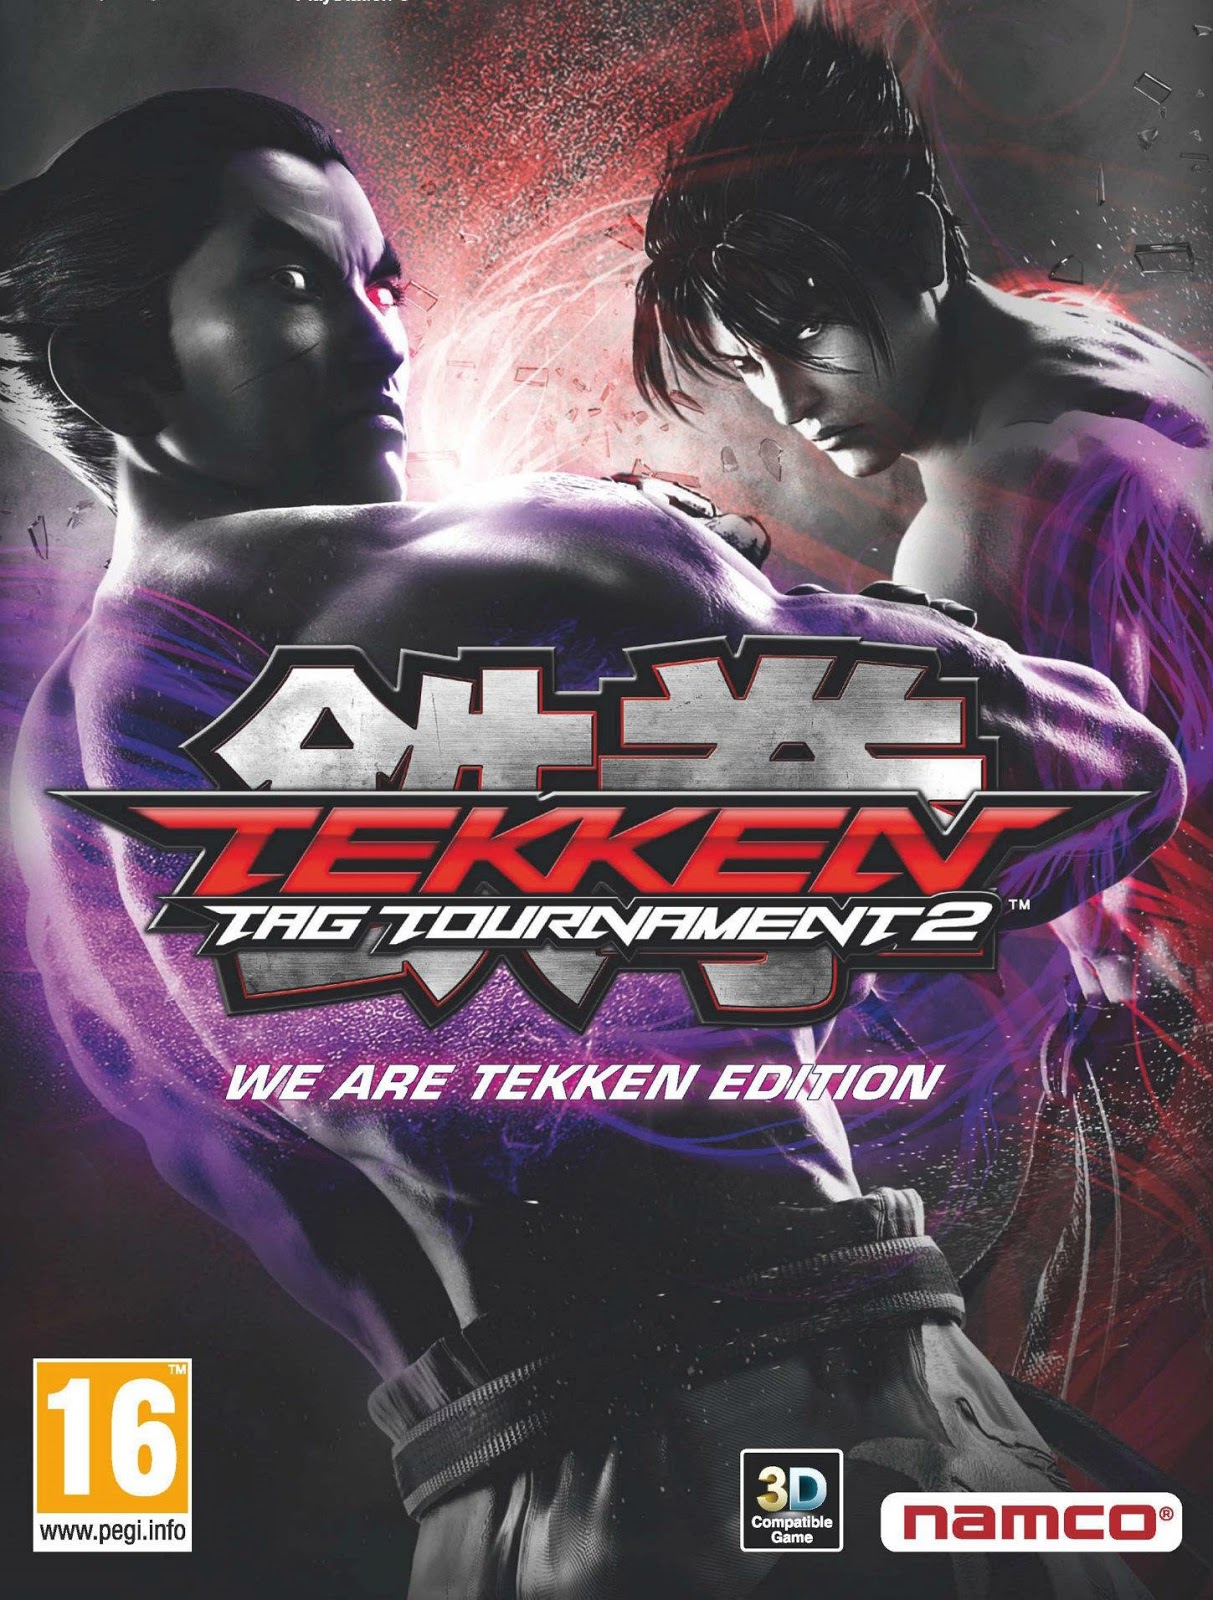 Zones Check Gaming Tekken Tournament 2 Game Full Version Free Download